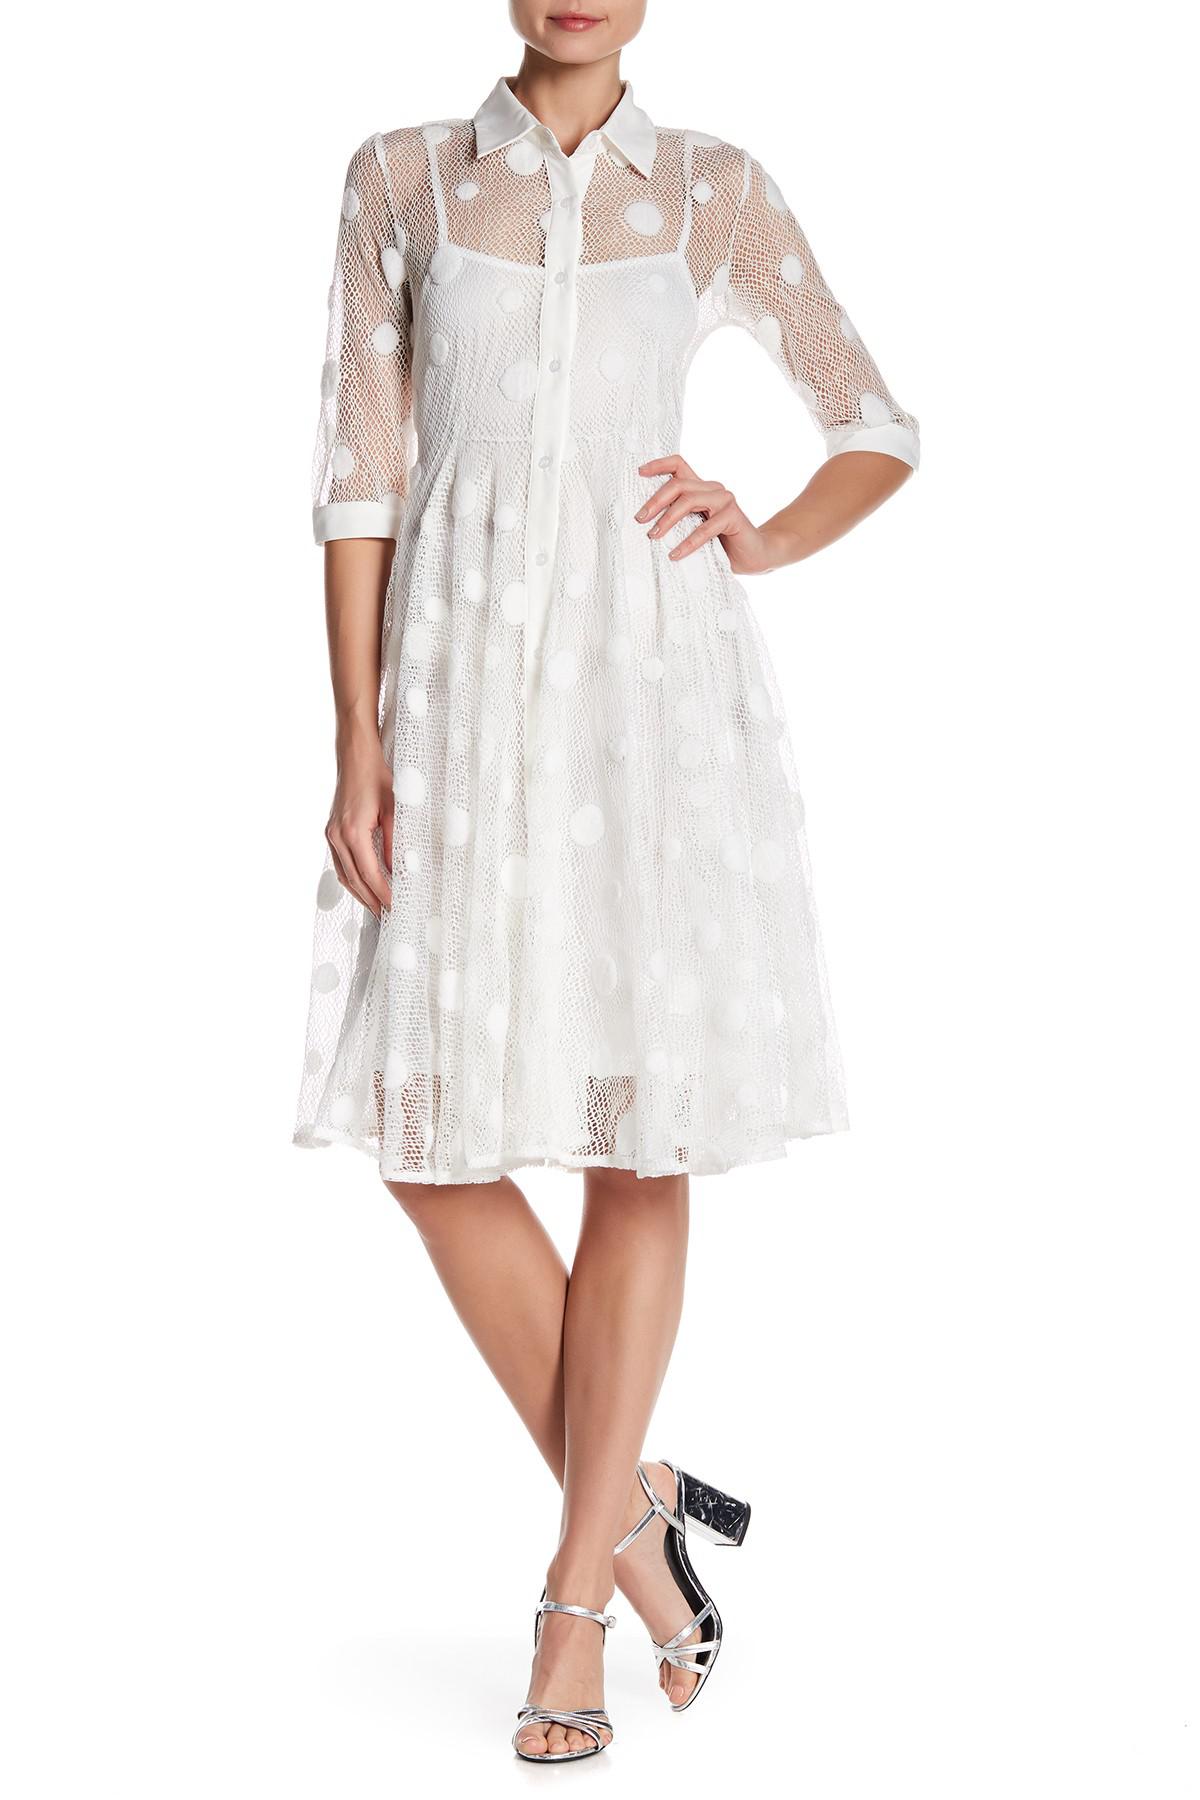 Gracia Polka Dot Mesh Dress in White | Lyst